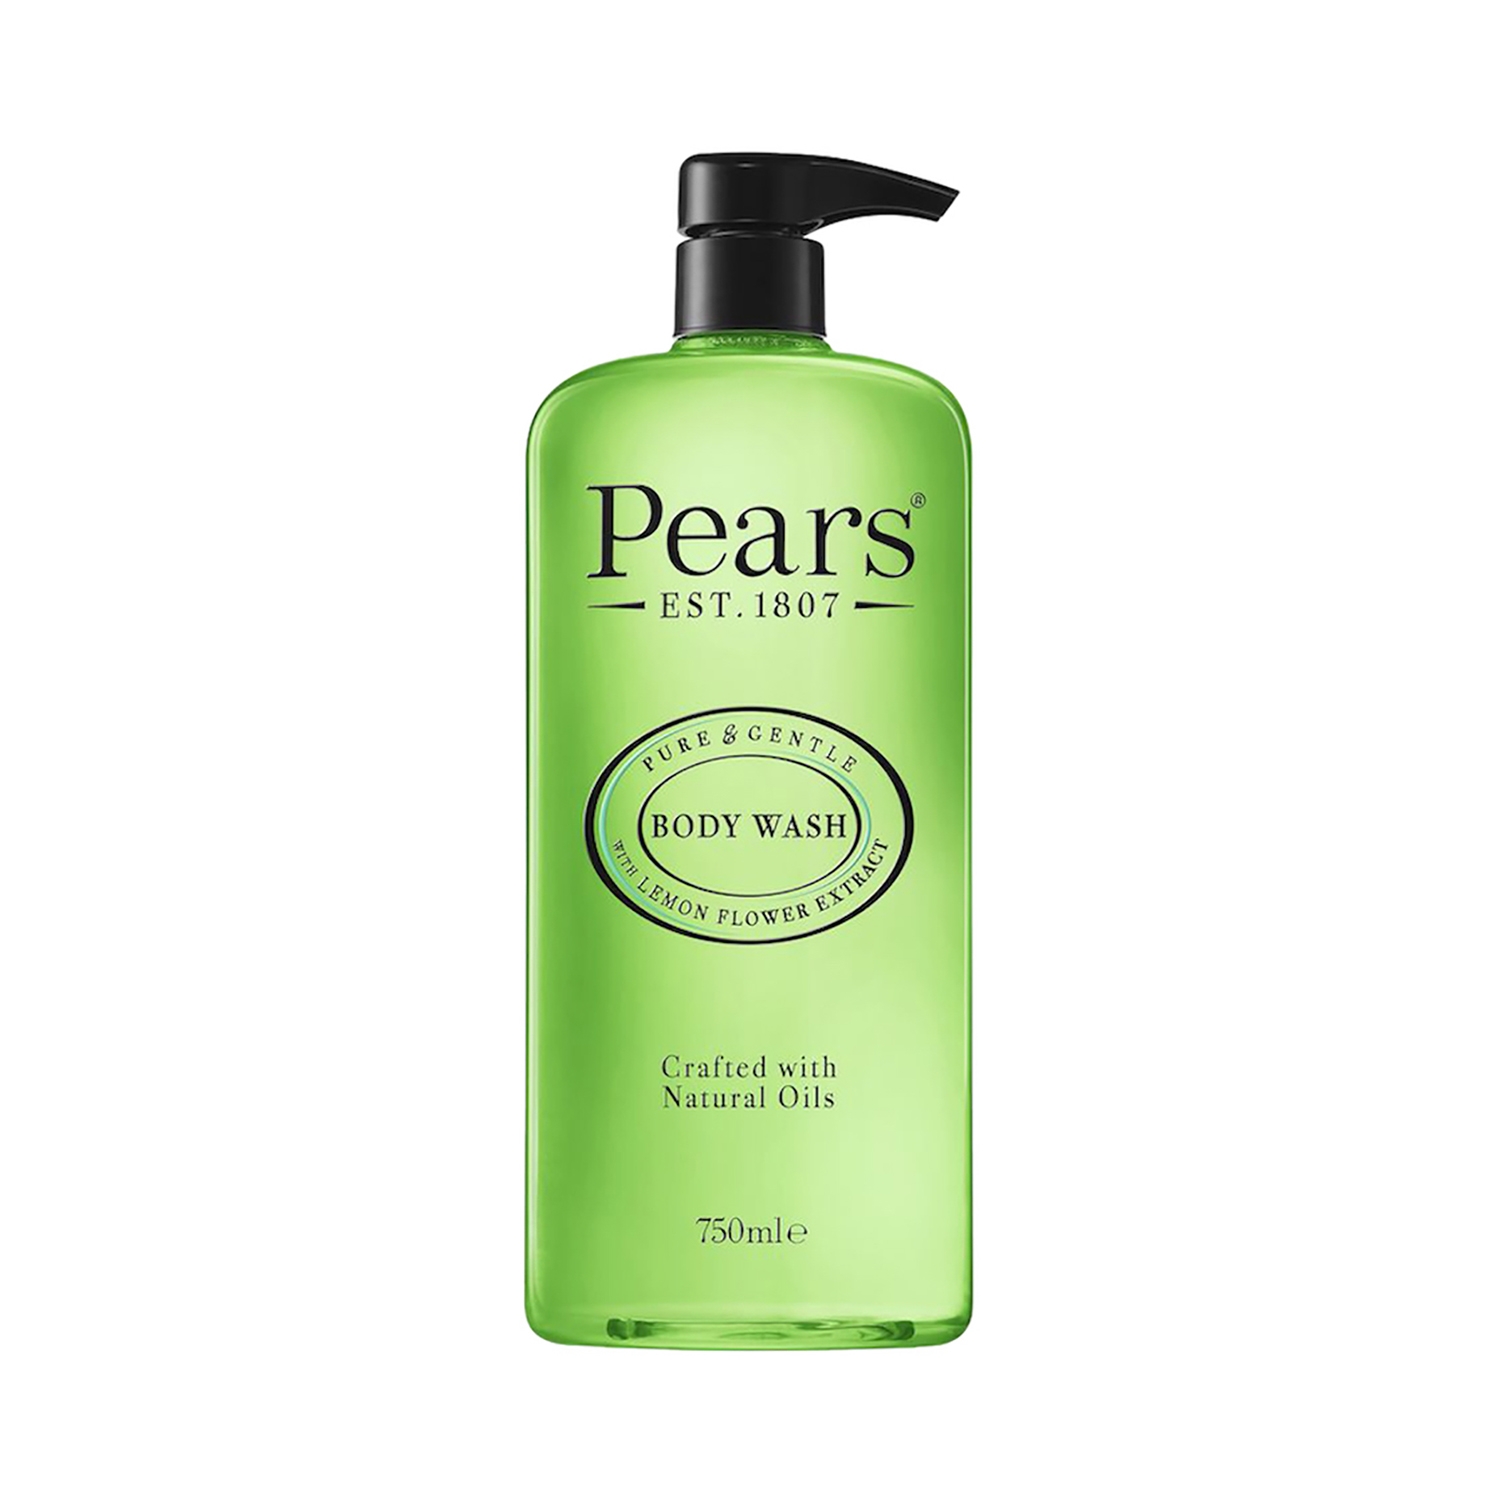 Pears | Pears Pure & Gentle Lemon Extract Body Wash (750ml)